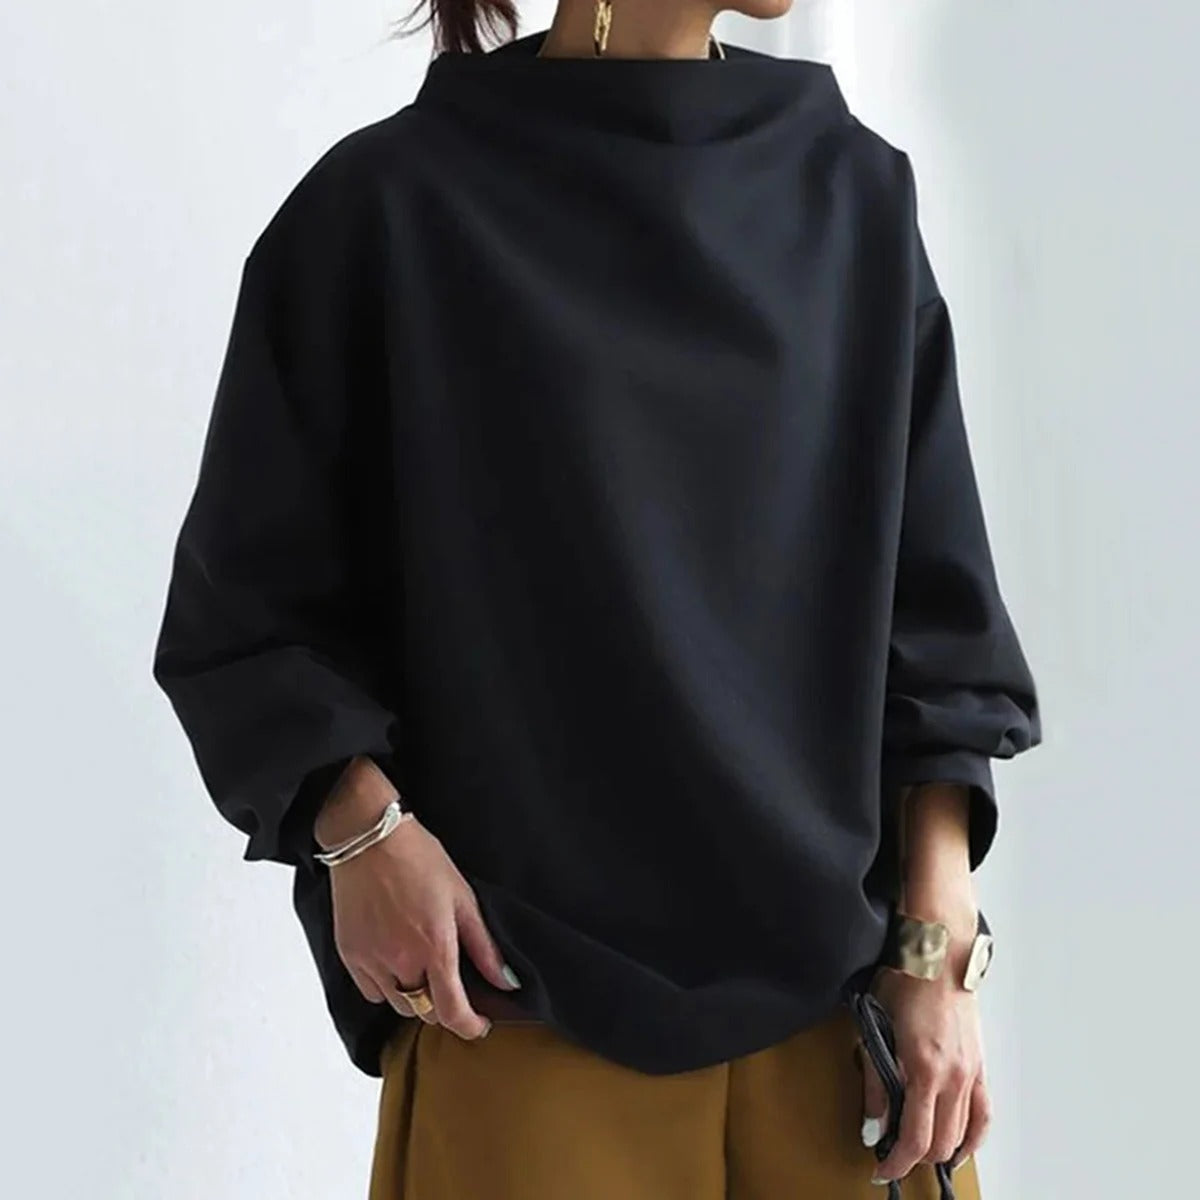 Adria - Fashionable Sweater